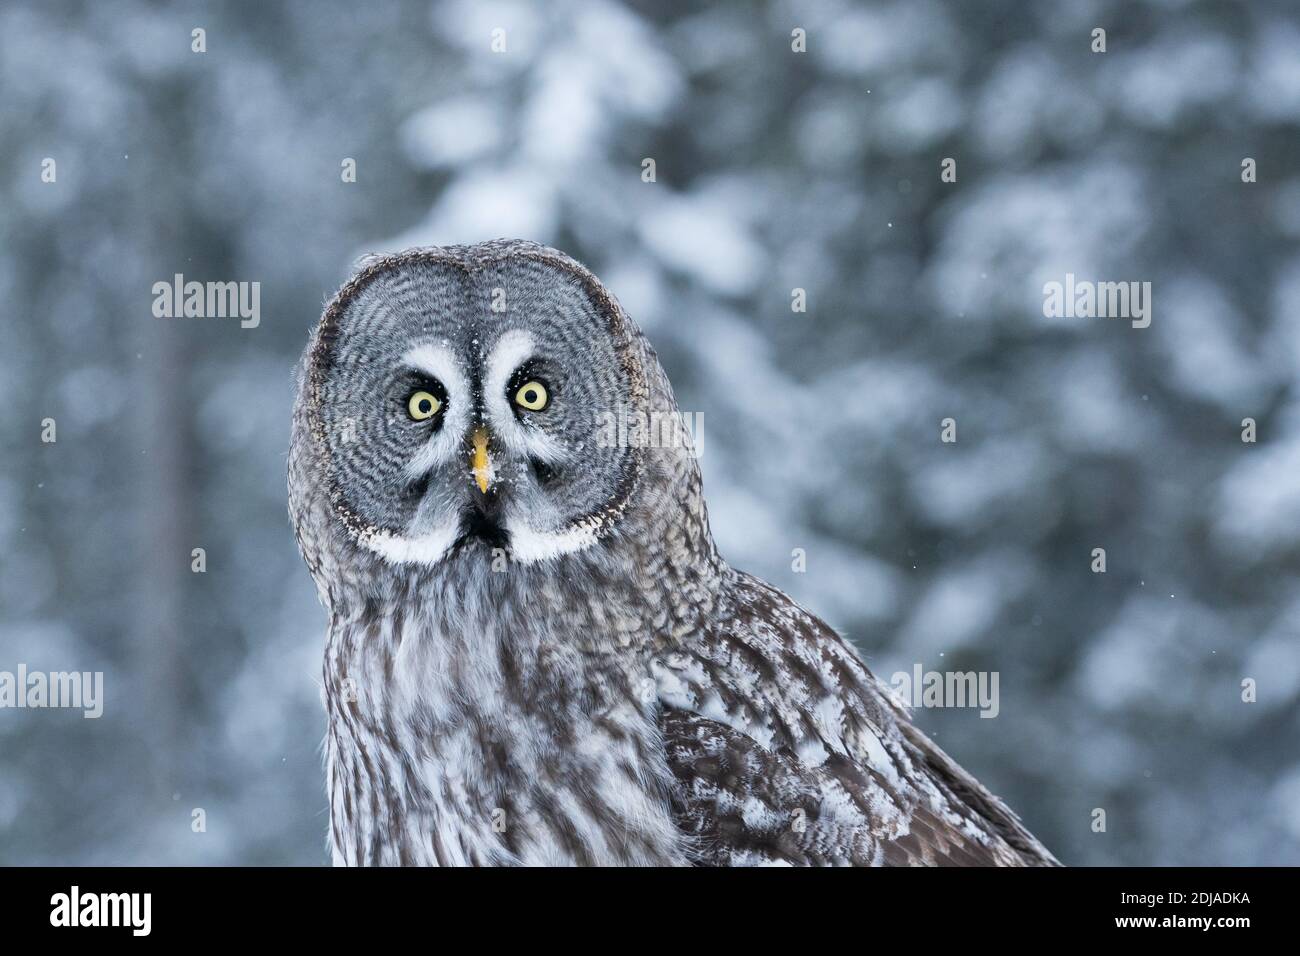 A close-up portrait of a majestic Great Grey Owl (Strix nebulosa) in snowy taiga forest near Kuusamo, Northern Finland. Stock Photo